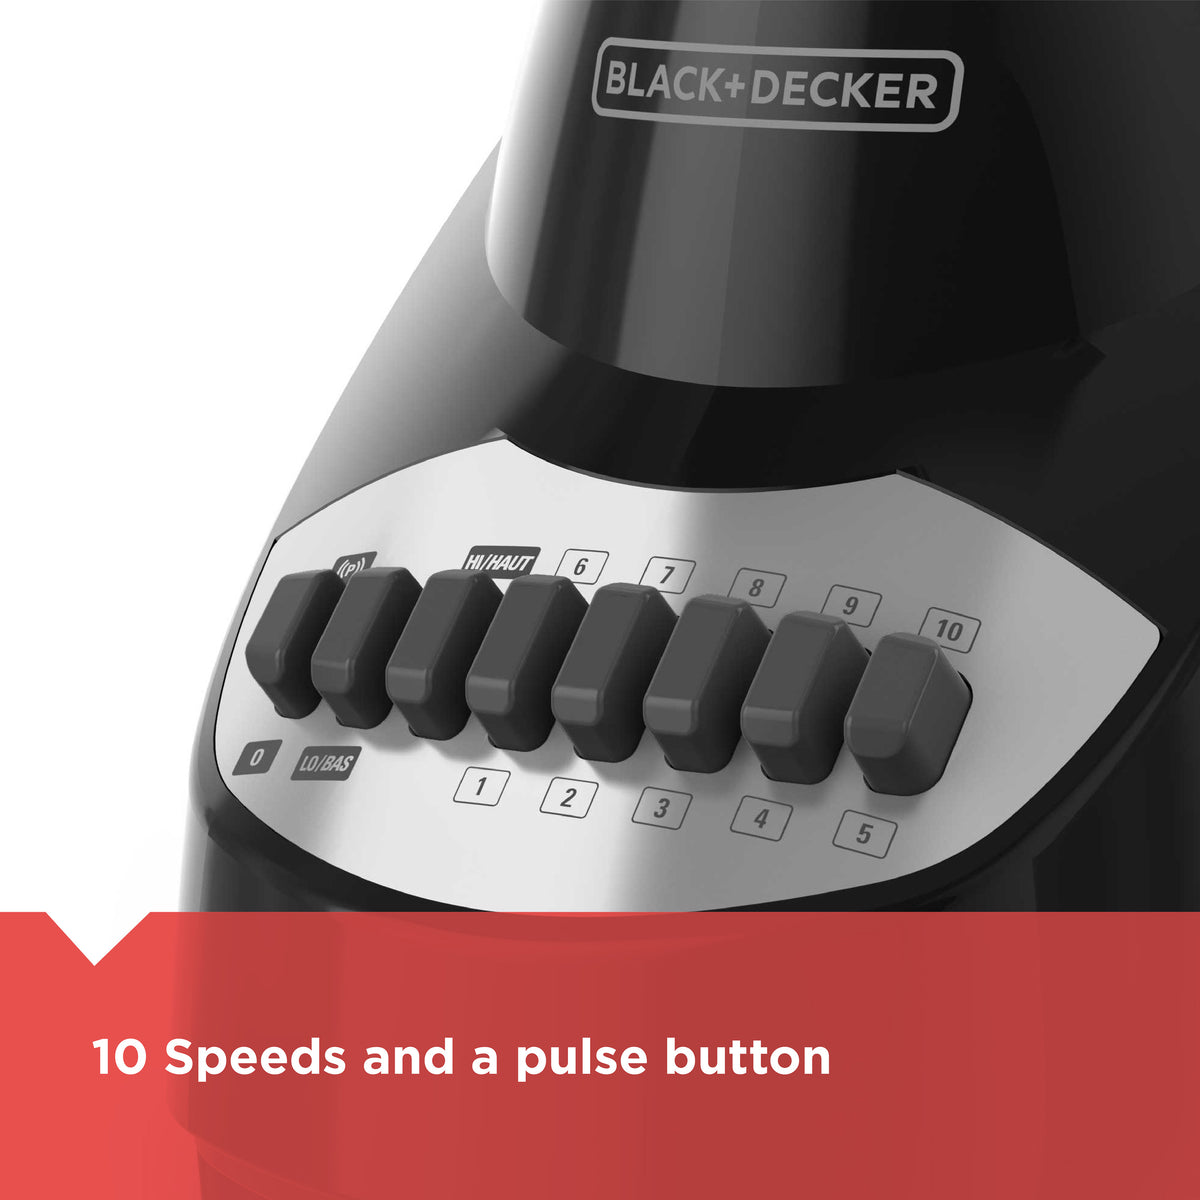 Bl1130sg Black & Decker FusionBlade Blender